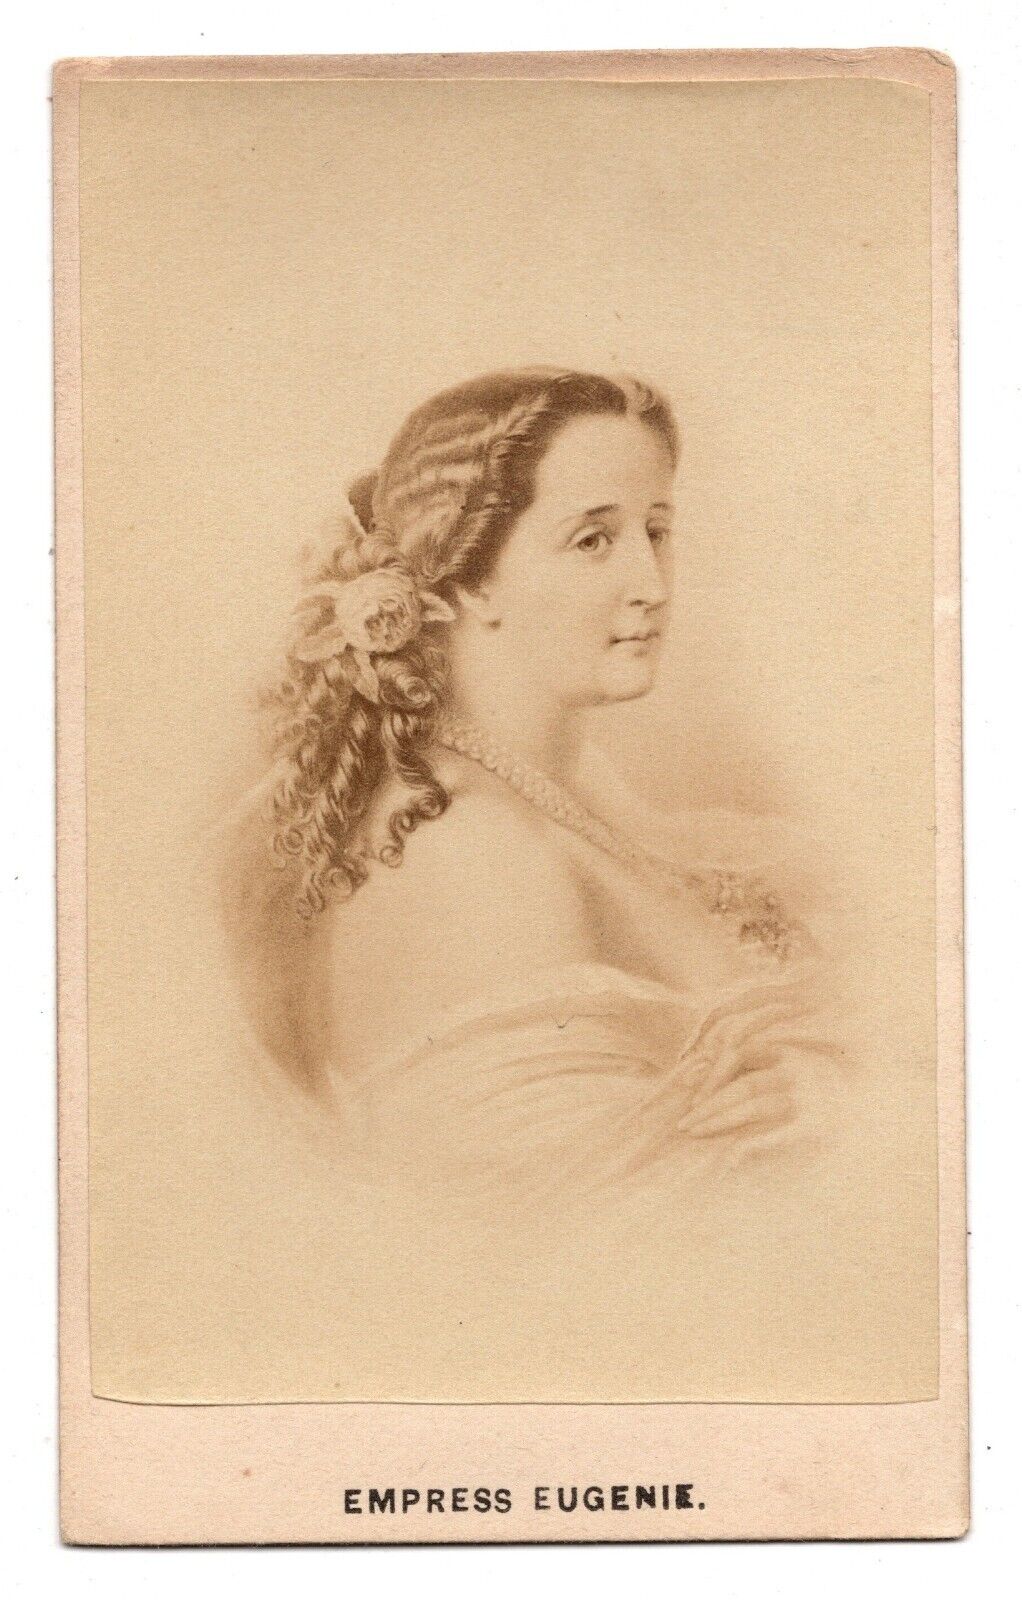 ANTIQUE C. 1870s CDV EMPRESS EUGENIE OF SPAIN WIFE OF NAPOLEAN III ALBUM FILLER